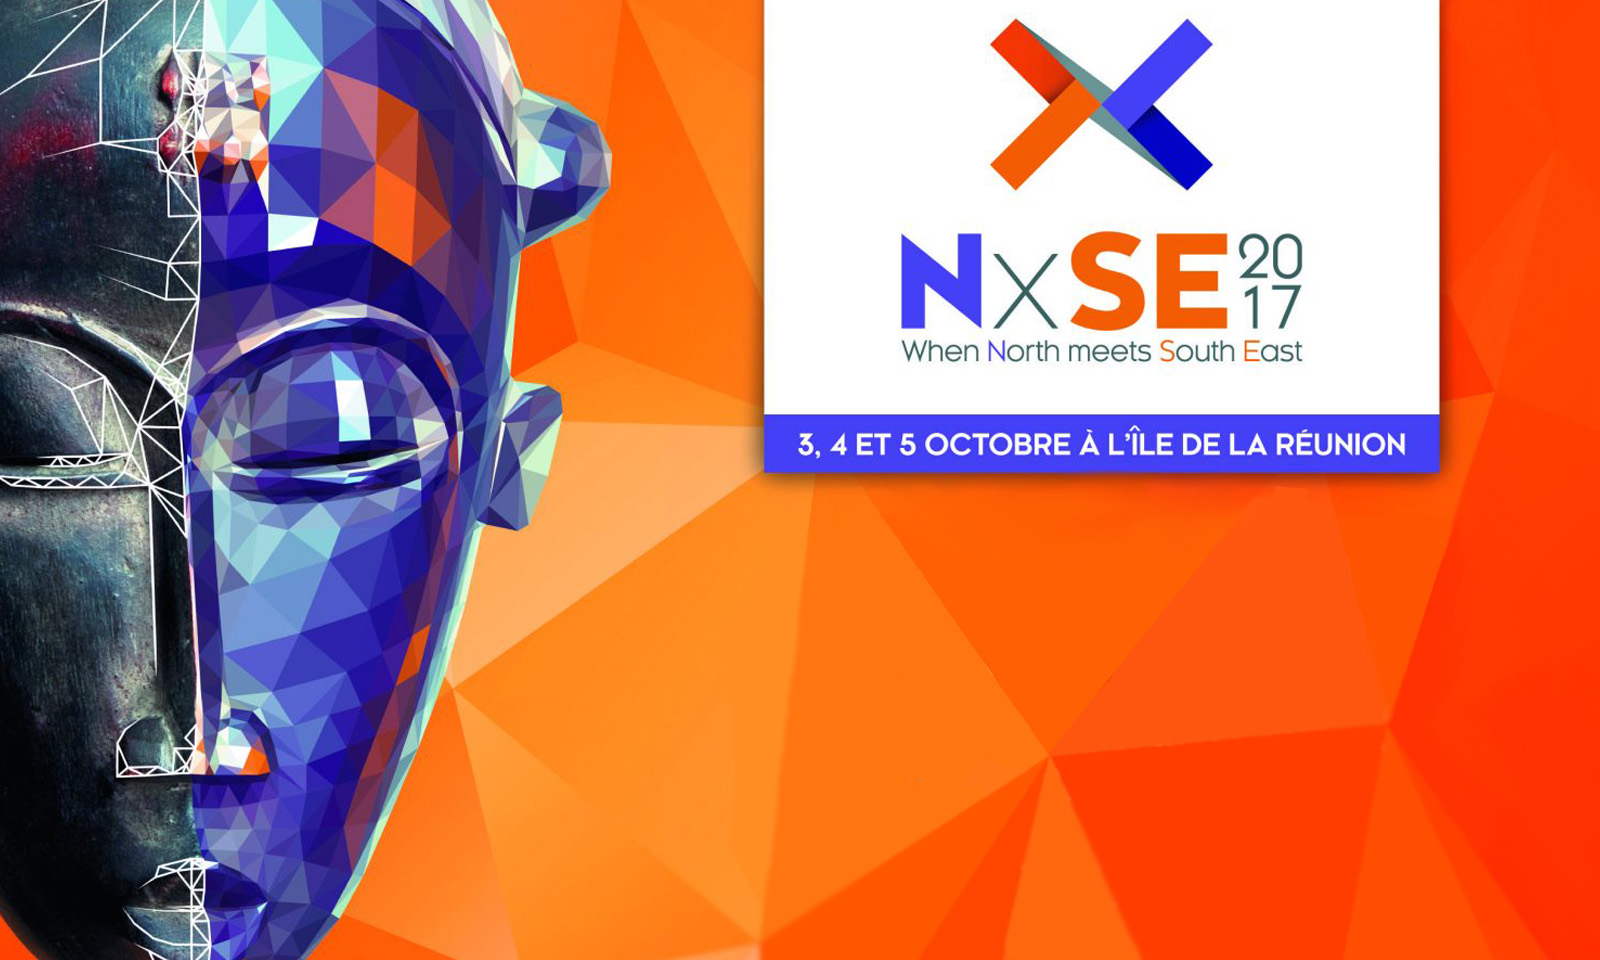 NxSe Forum: Digital Réunion announces a 3rd edition in October 2018